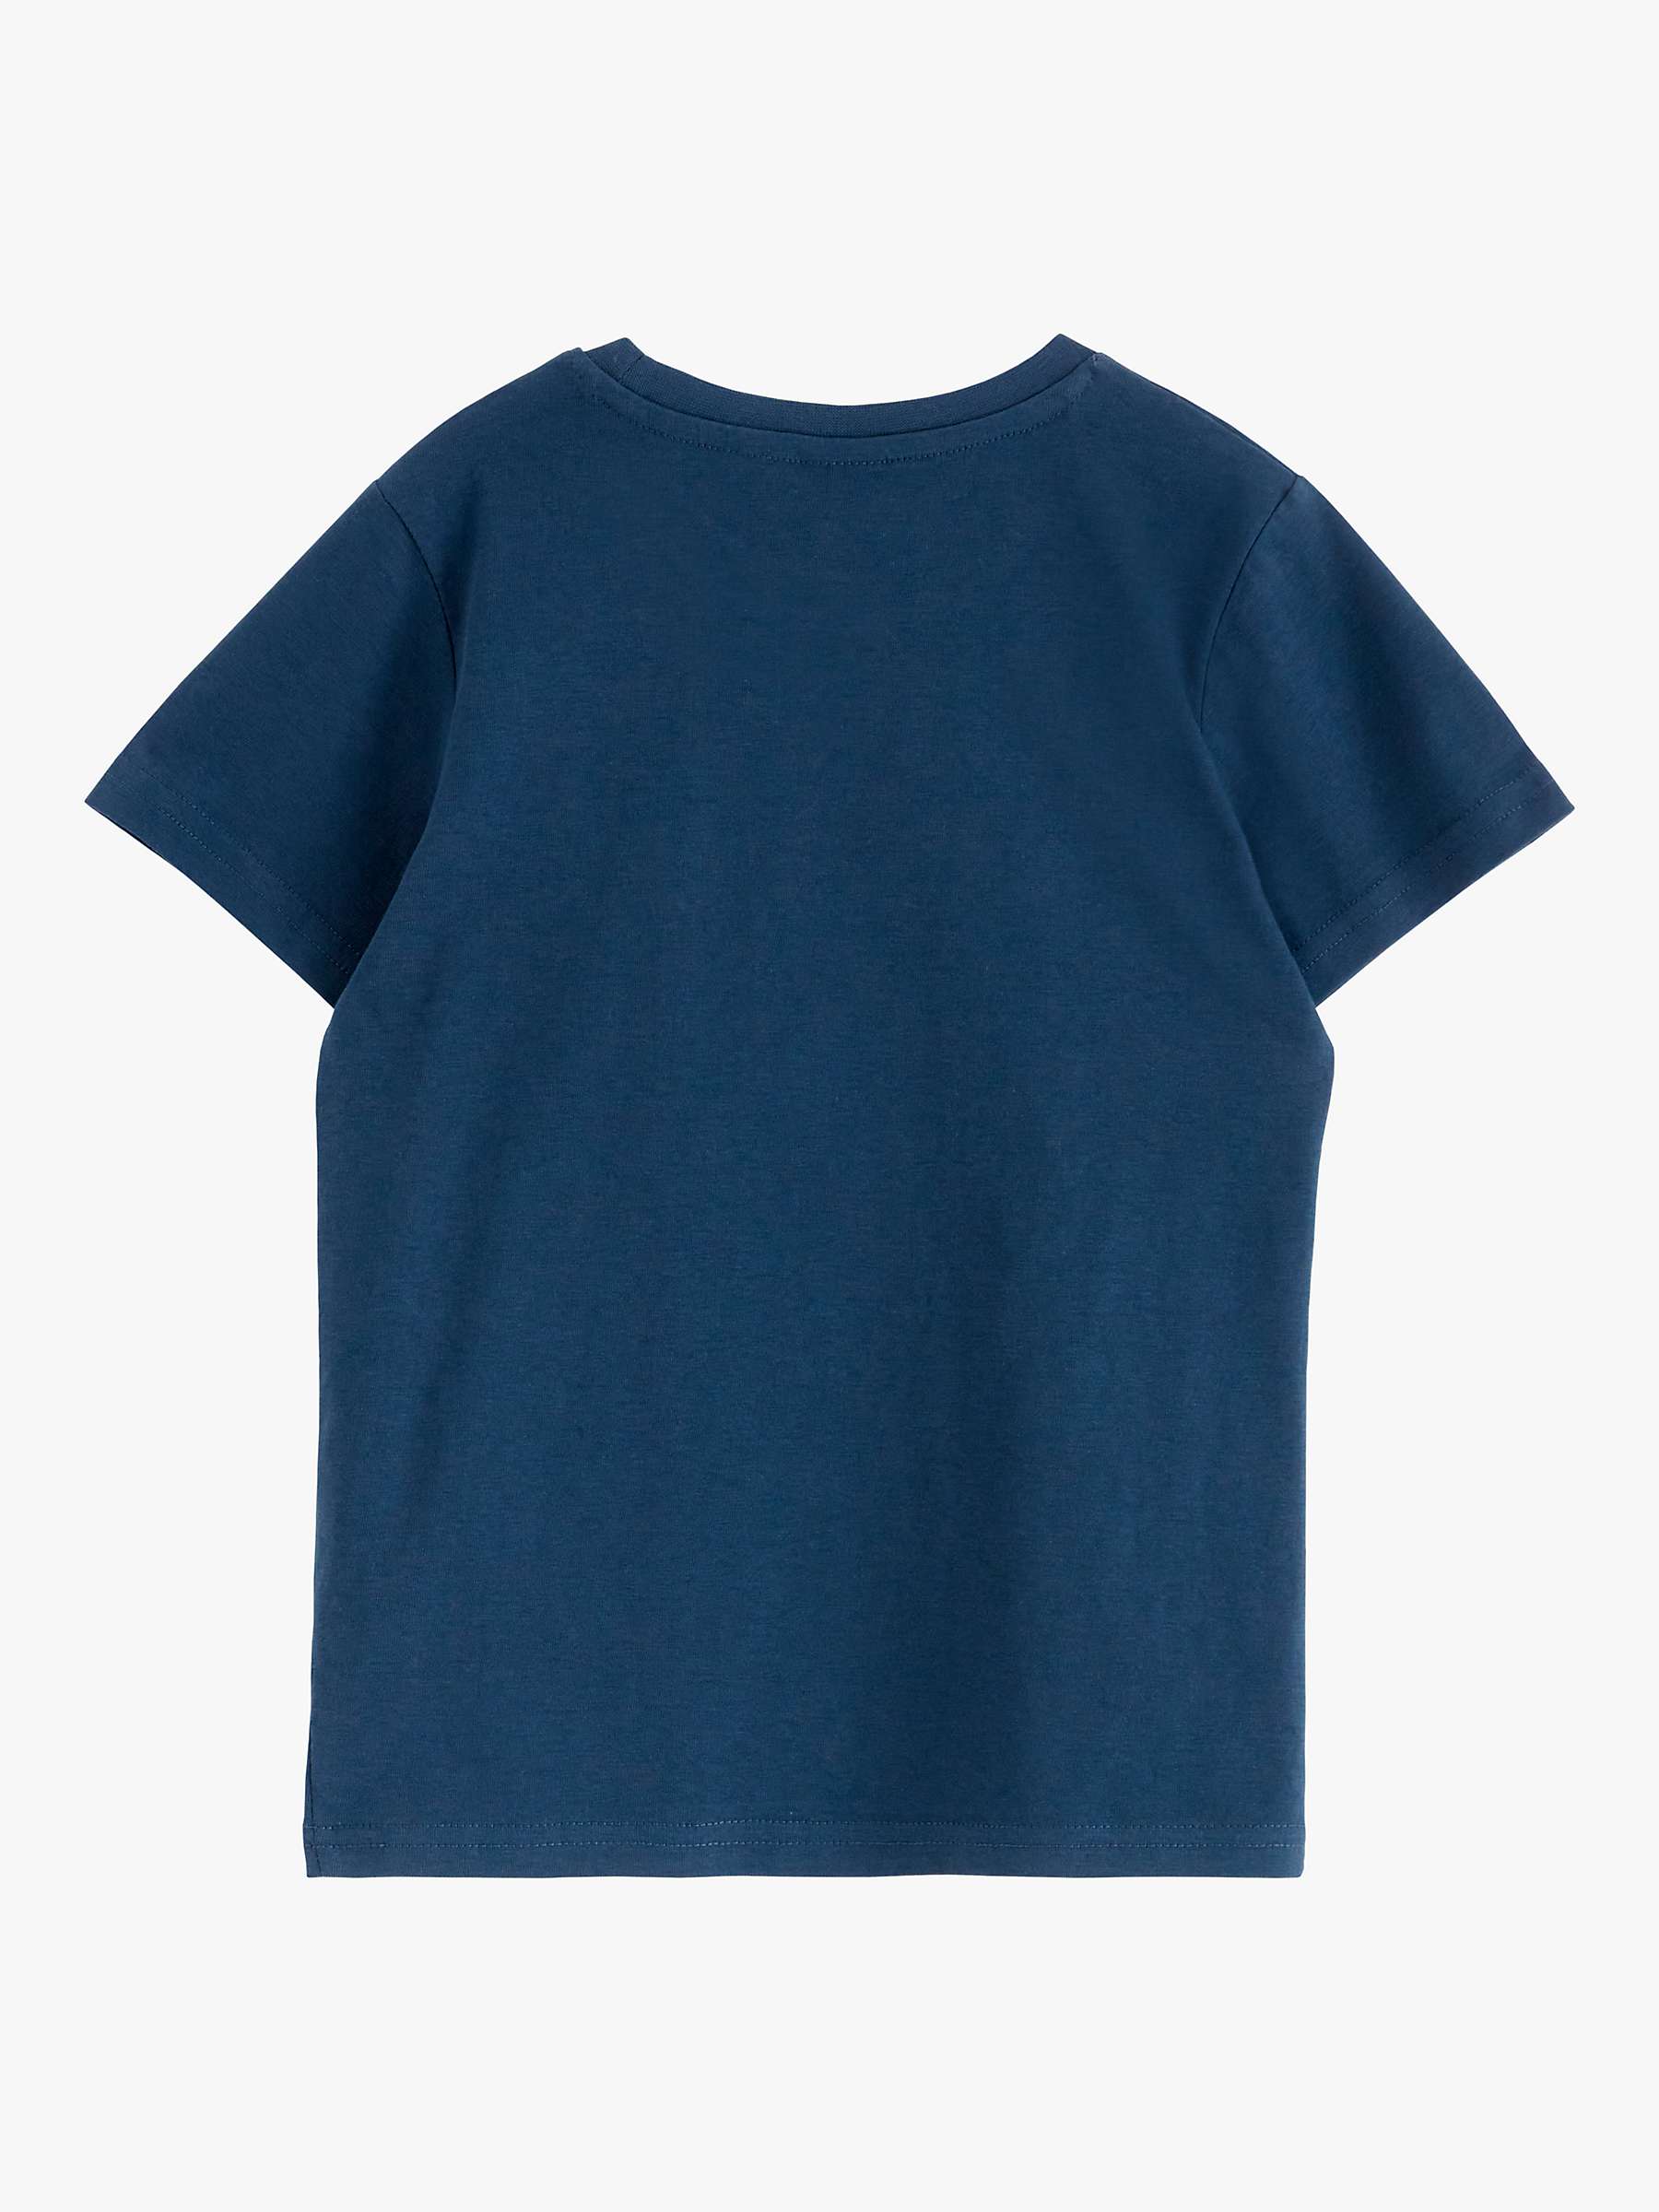 Buy Lindex Kids' Monster Truck  Reversible Sequin Short Sleeve T-Shirt, Dark Blue Online at johnlewis.com